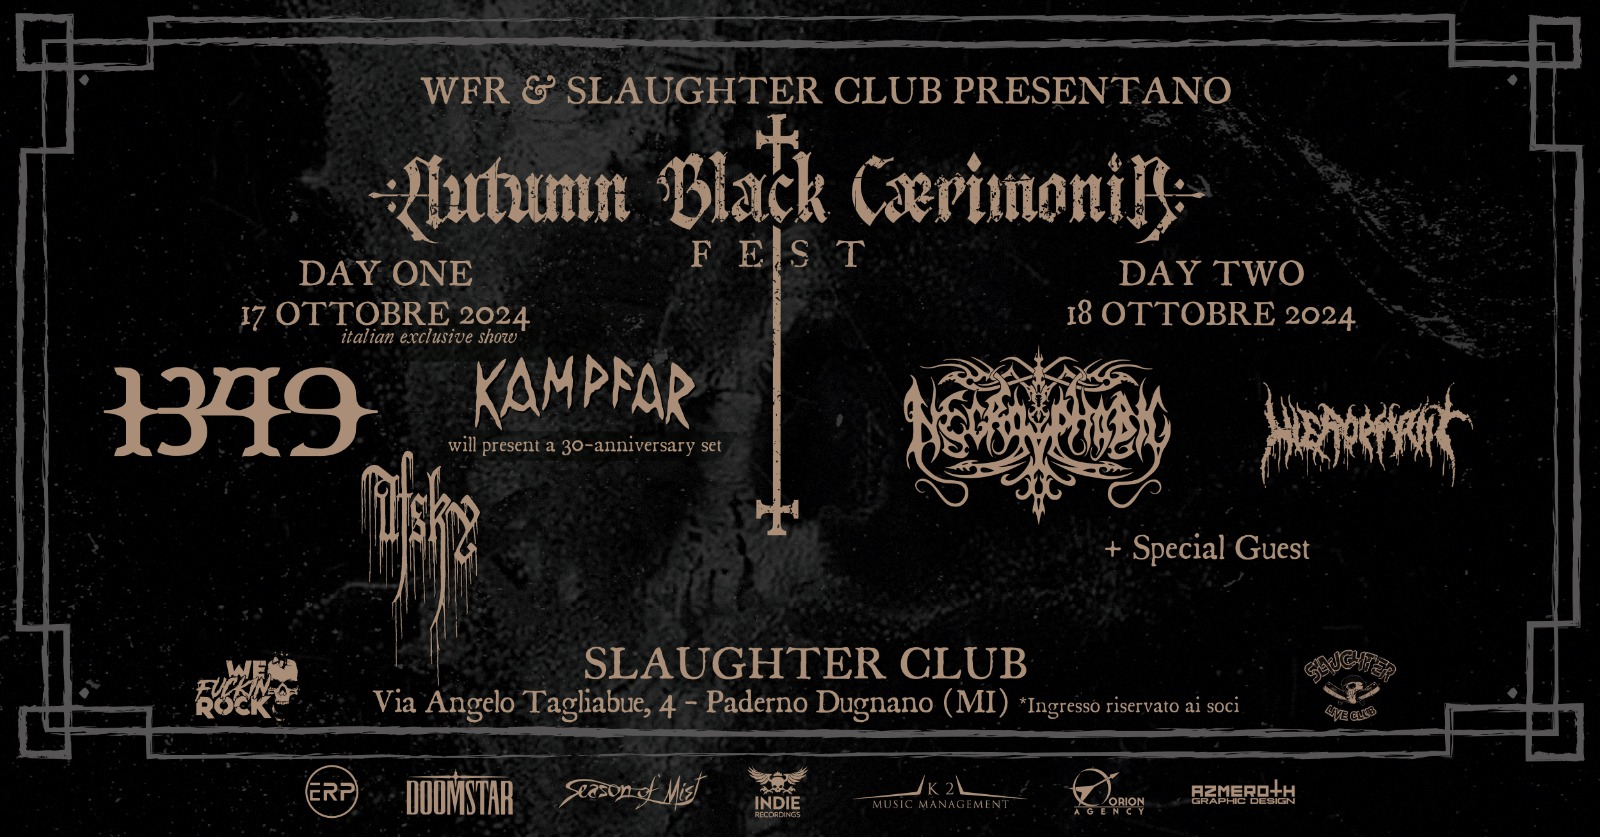 1349 + KAMPFAR + NECROPHOBIC + HIEROPHANT – dal vivo all’Autumn Black Caerimonia Fest, allo Slaughter Club il 17-18 ottobre 2024